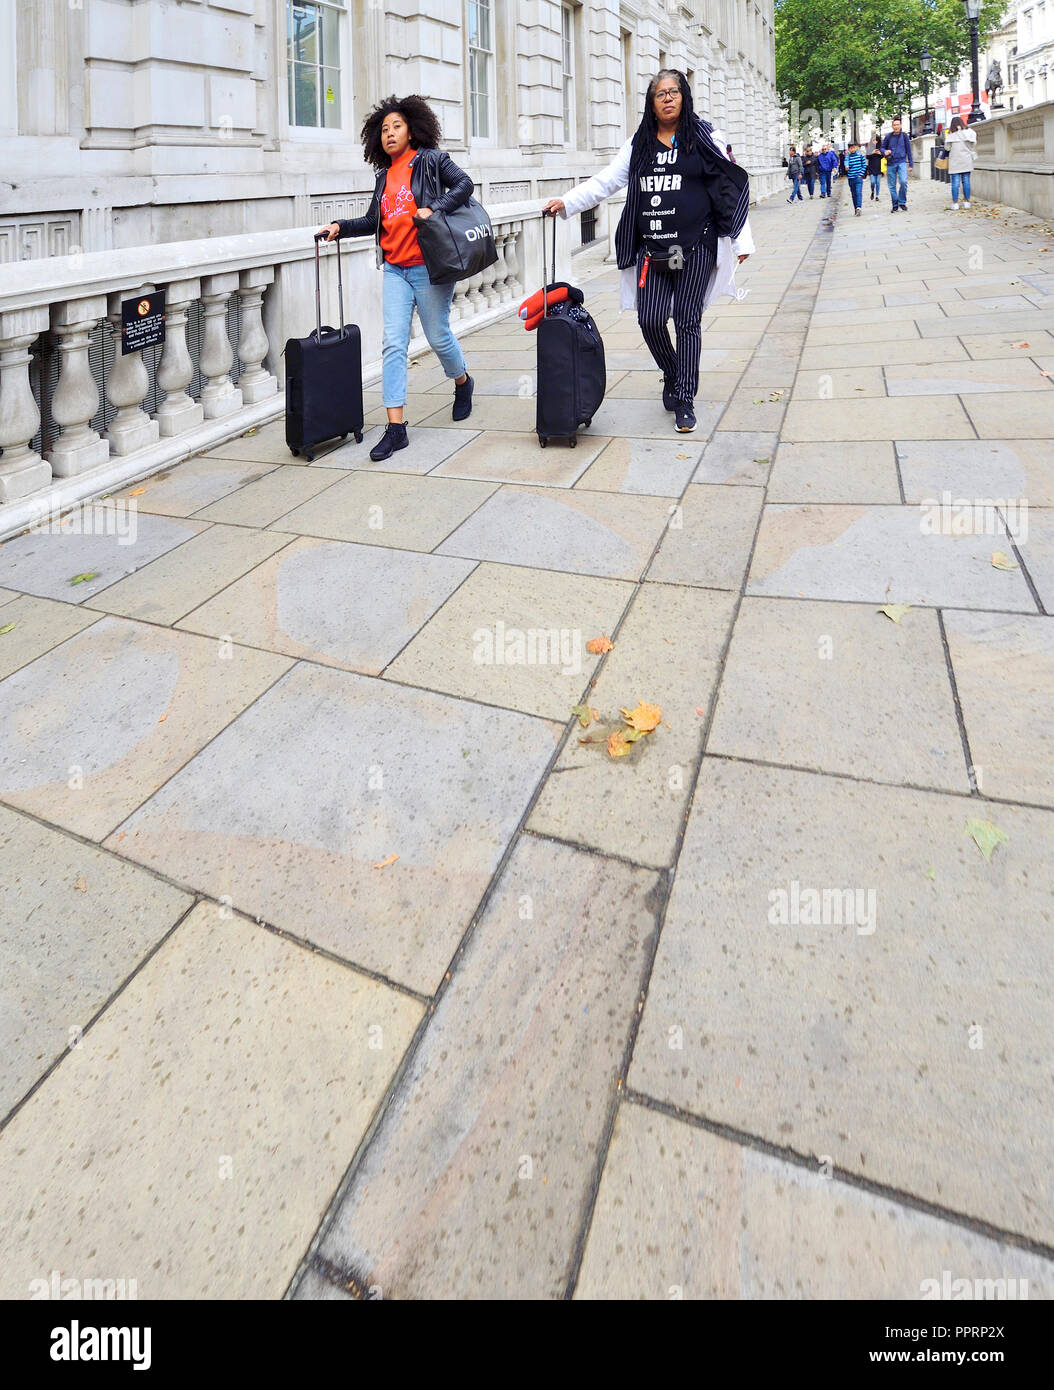 Two black women wheeling luggage in Whitehall, Westminster, London, England, UK. Stock Photo